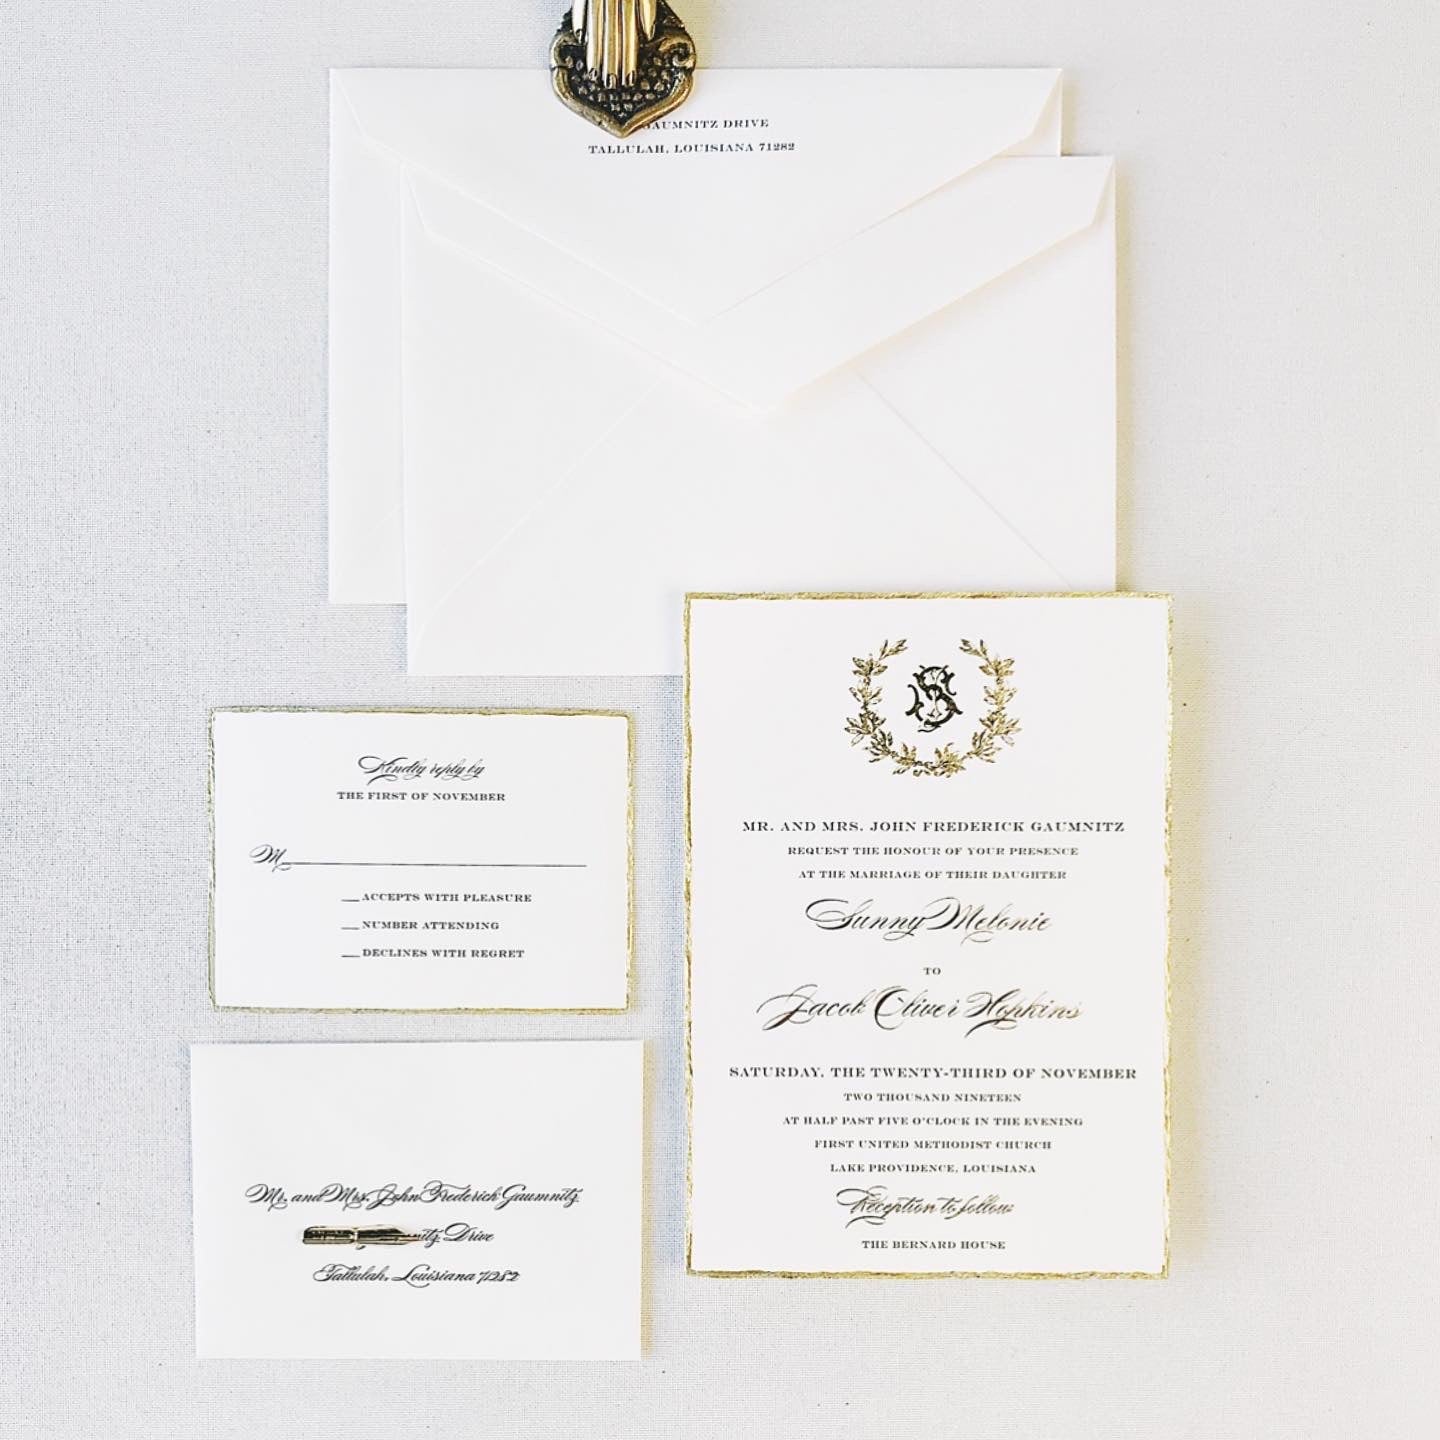 Gaumnitz Wedding Invitation - Deposit Listing